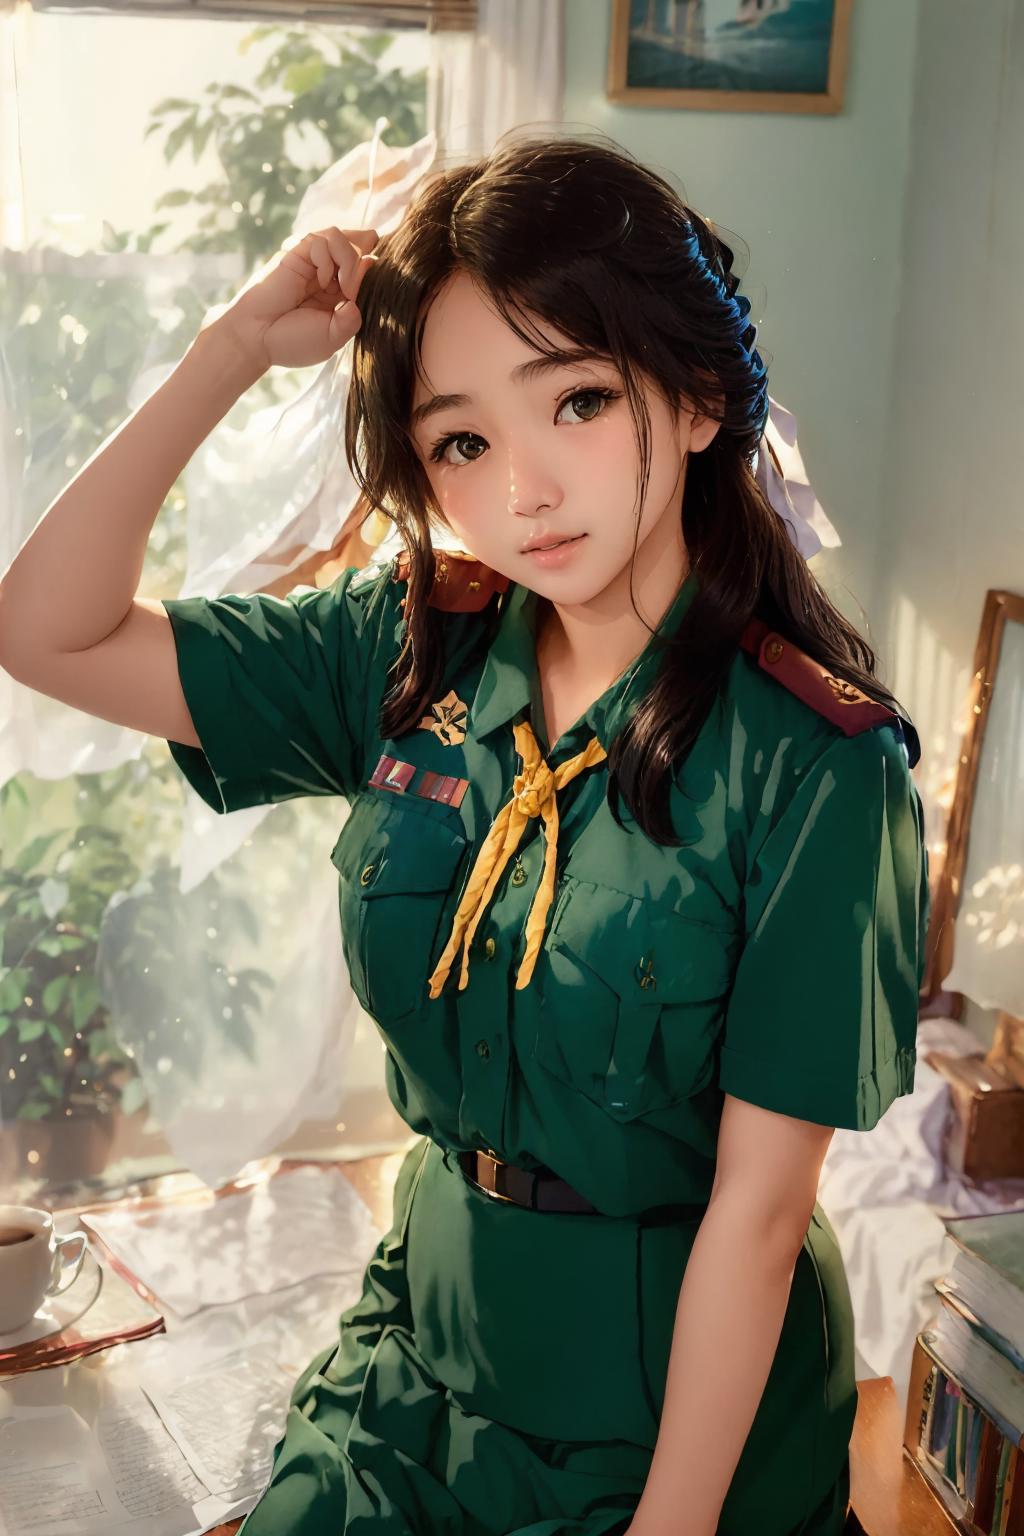 Thai girl scout uniform LoRA image by poomshift